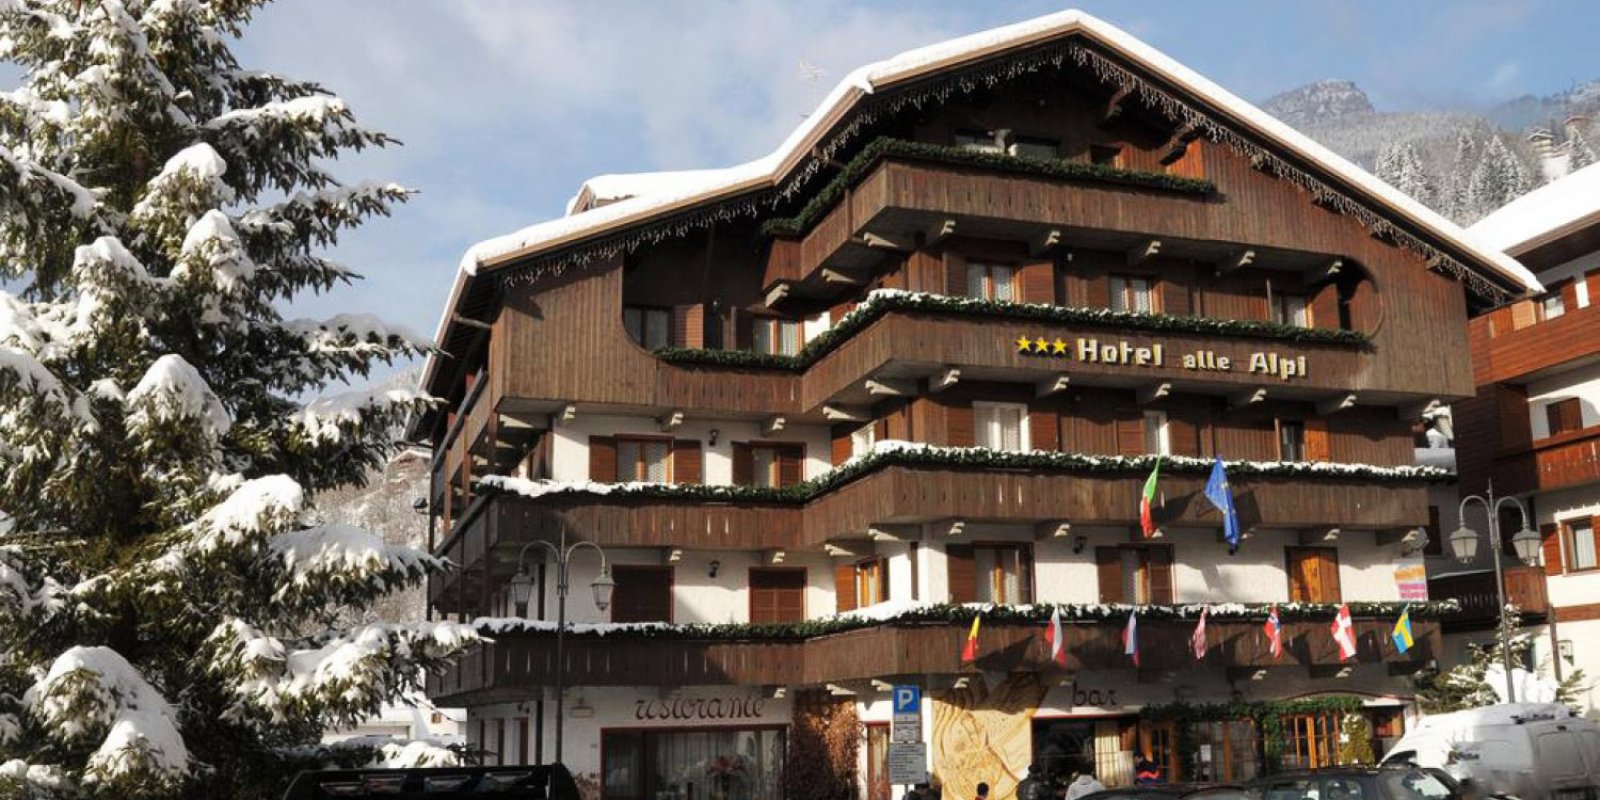 Hotel Alle Alpi 